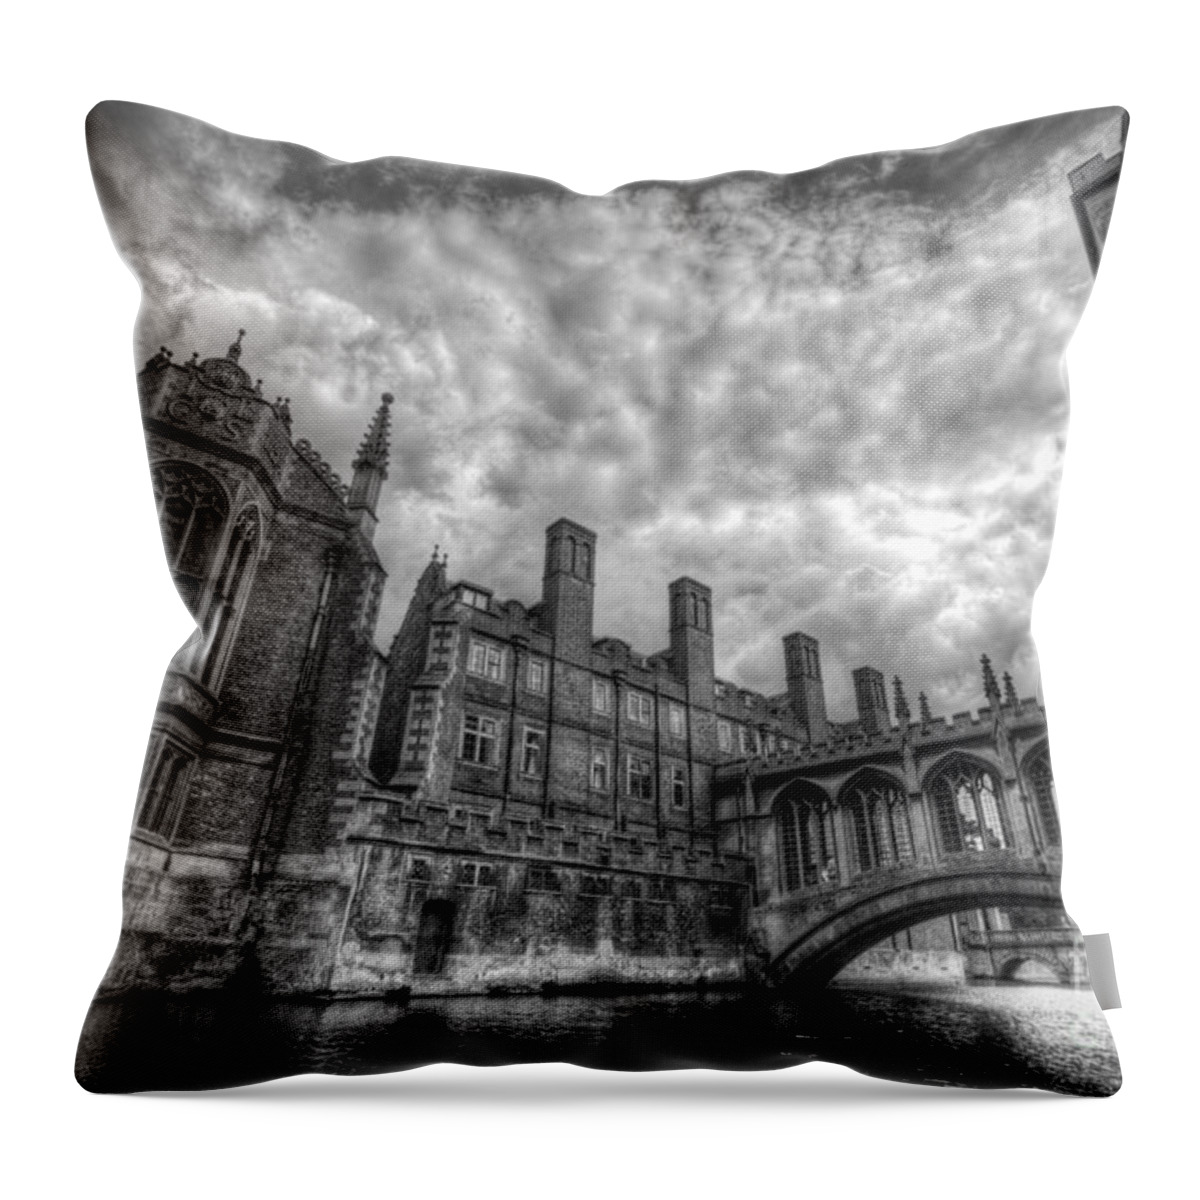 Art Throw Pillow featuring the photograph Bridge Of Sighs - Cambridge by Yhun Suarez